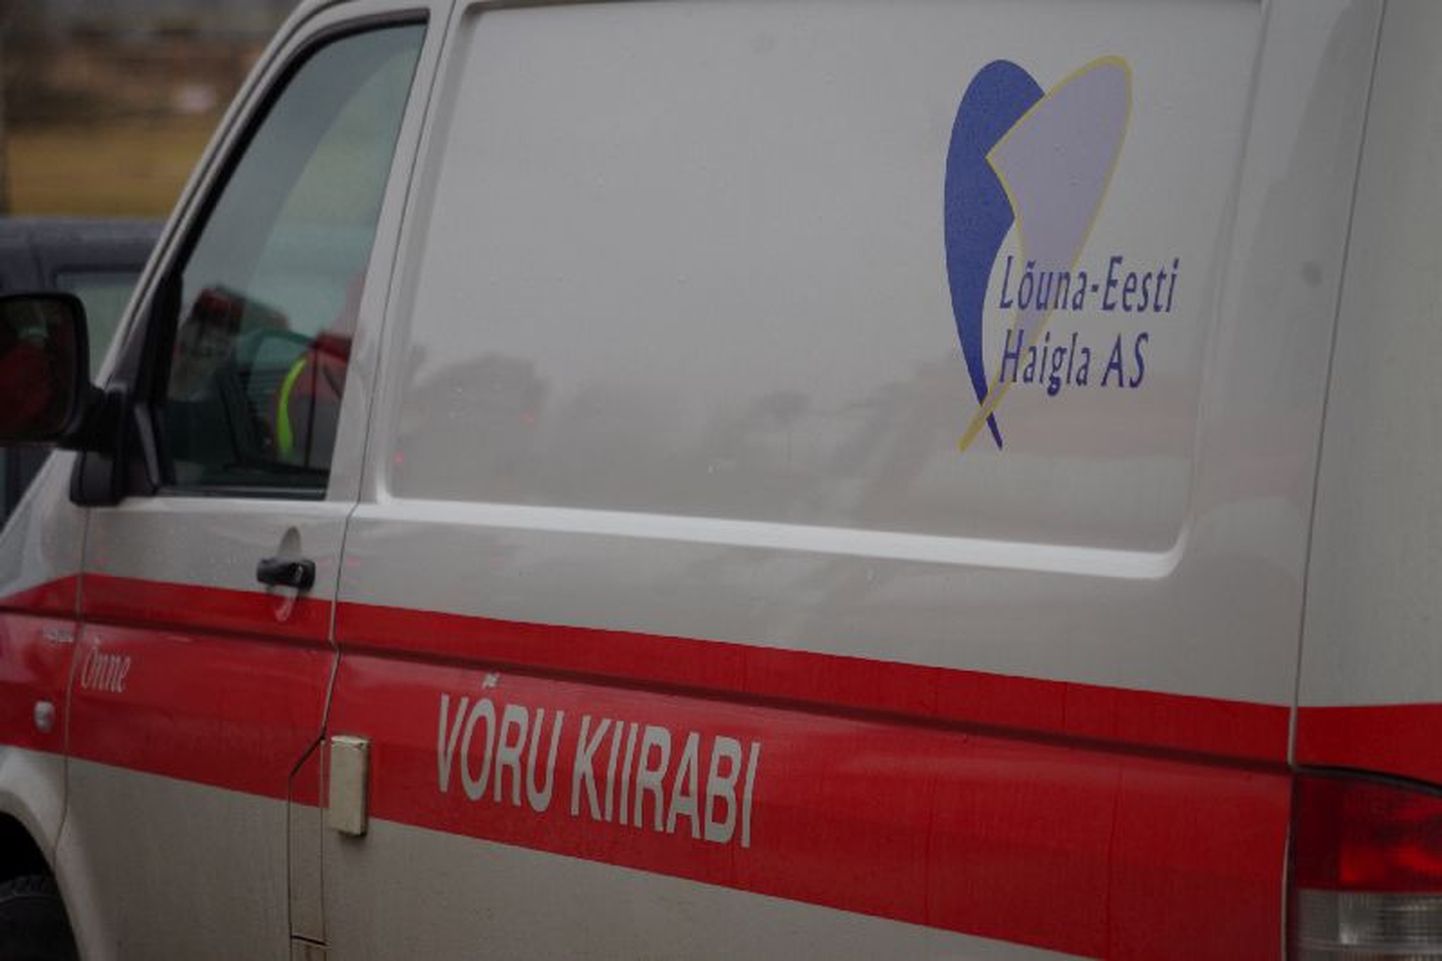 Kiirabi toimetas mootorratturi Lõuna-Eesti haiglasse.